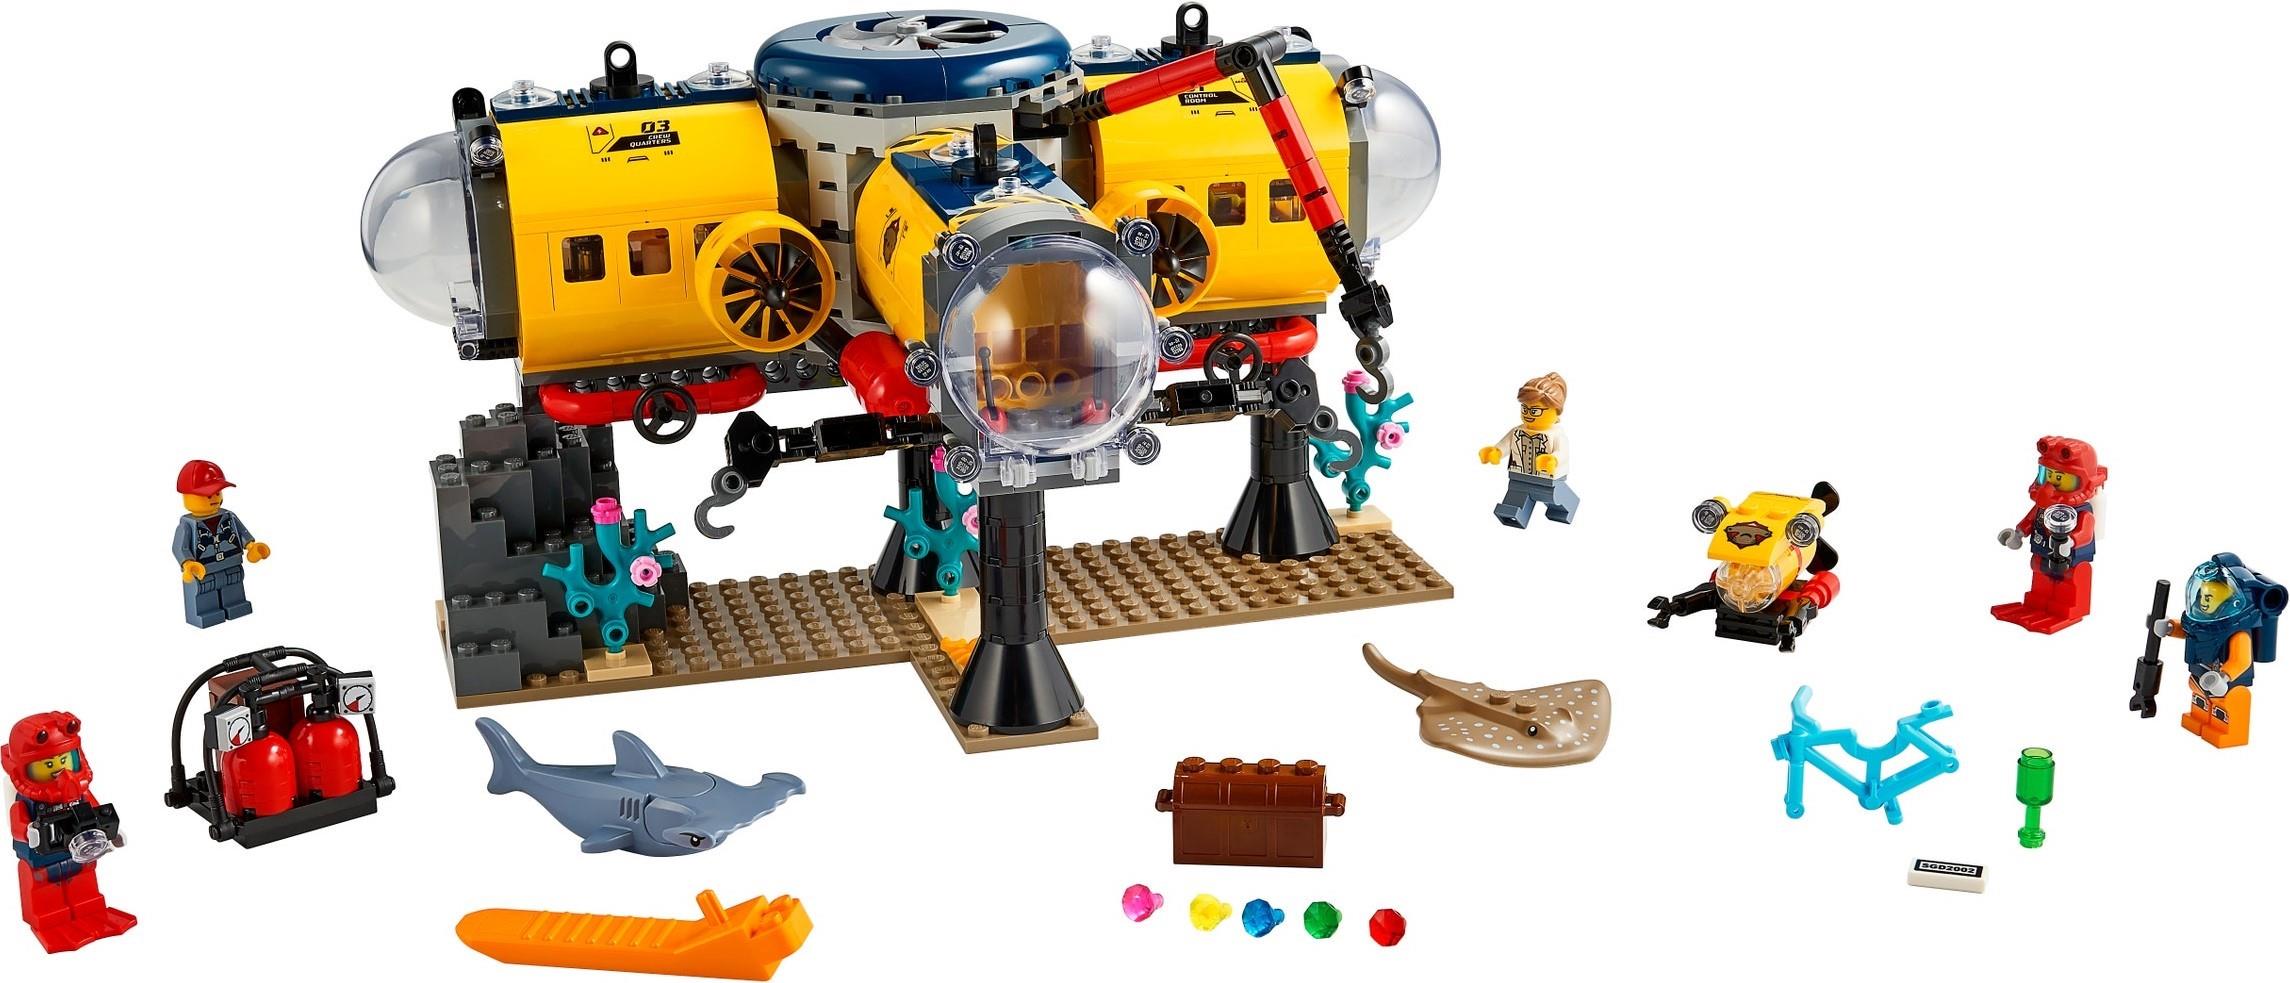 LEGO 60265 City Deep Sea Explorers Ocean Exploration Base